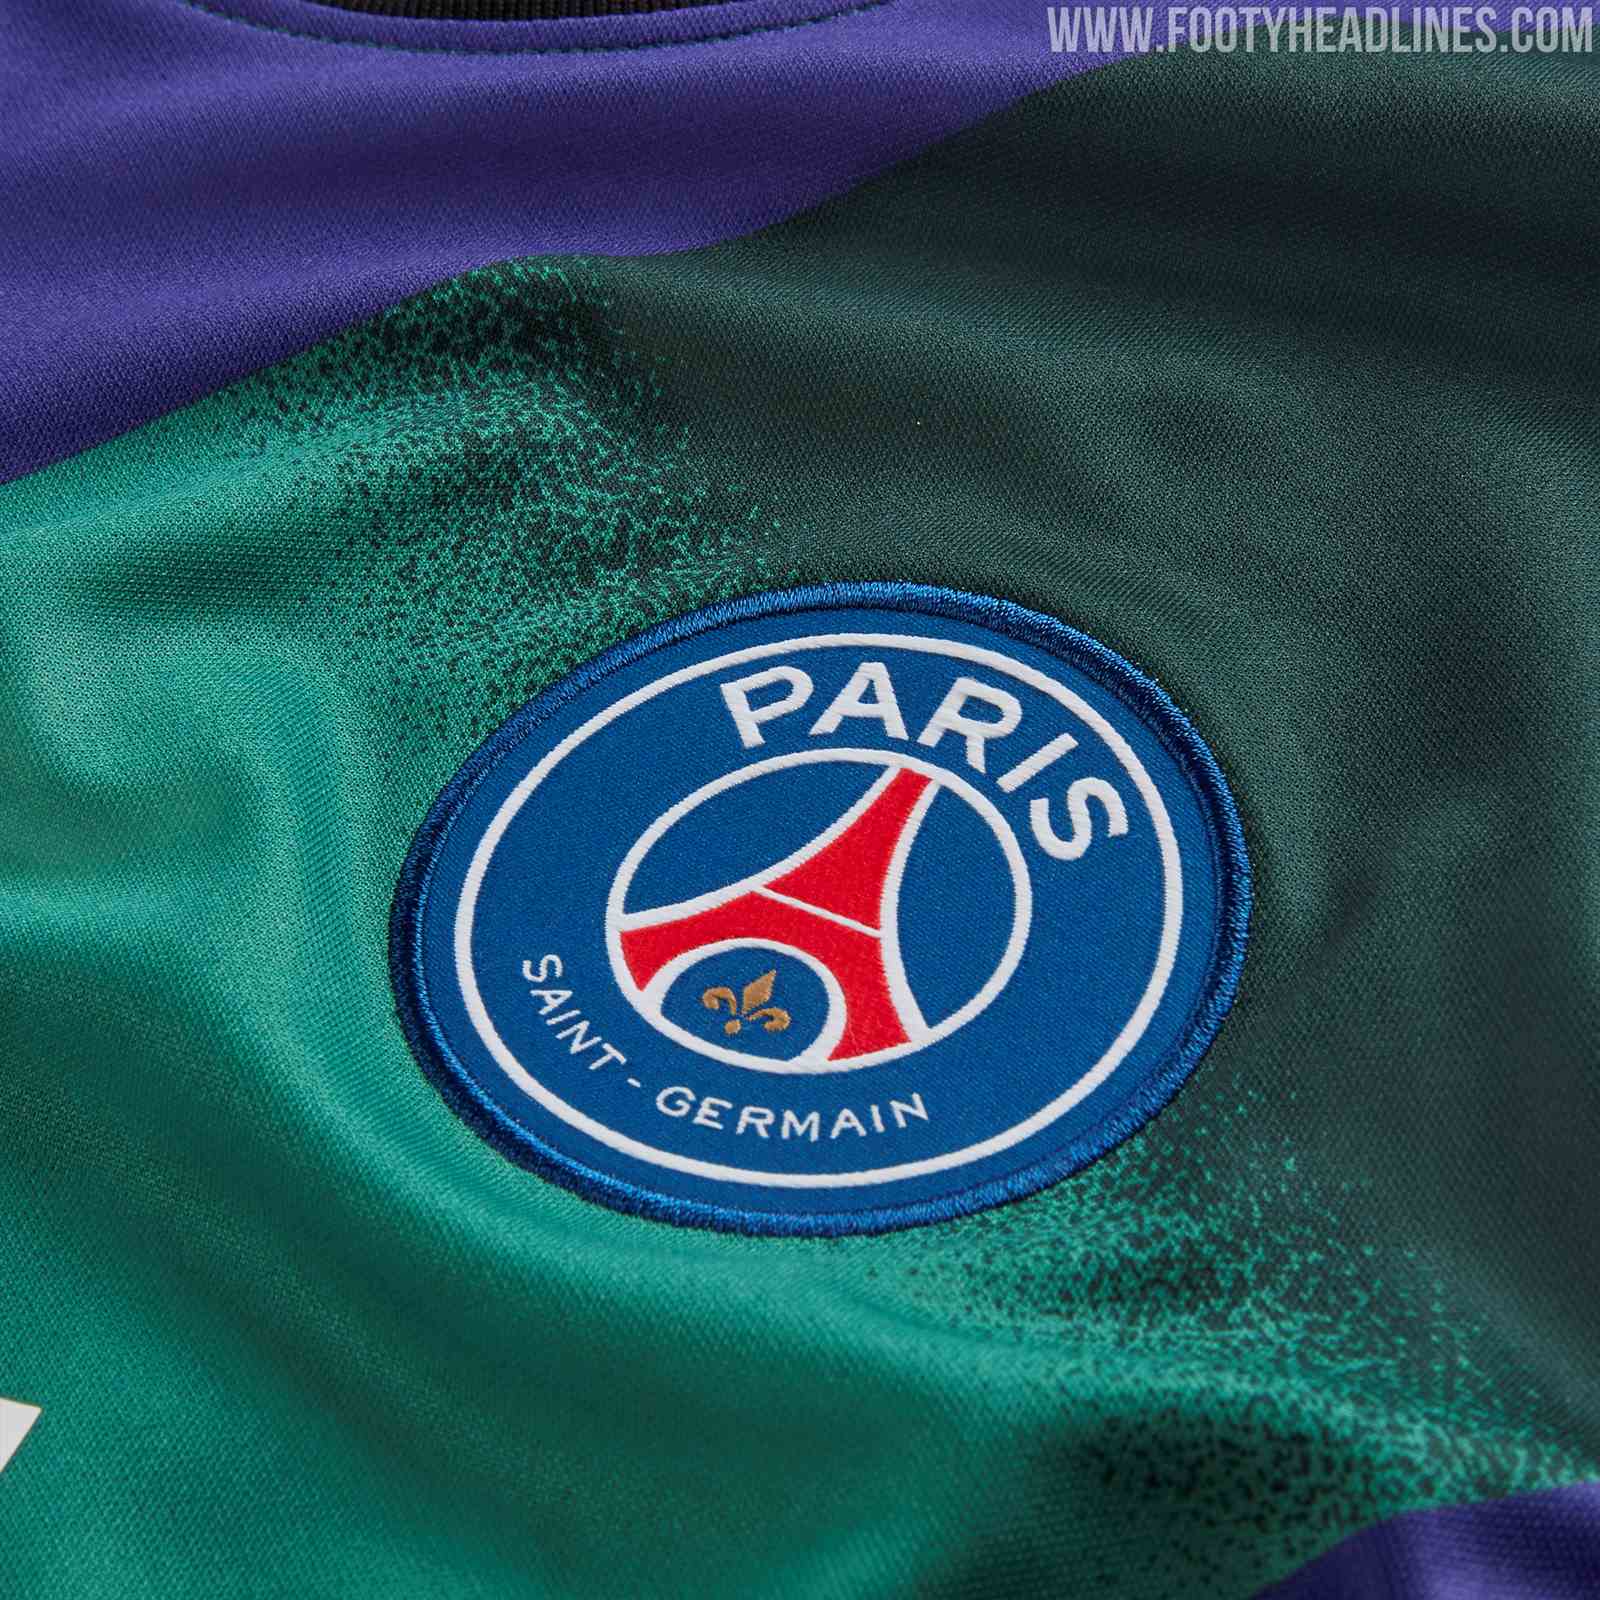 PSG 19-20 Champions League Goalkeeper Kit Released - Footy Headlines